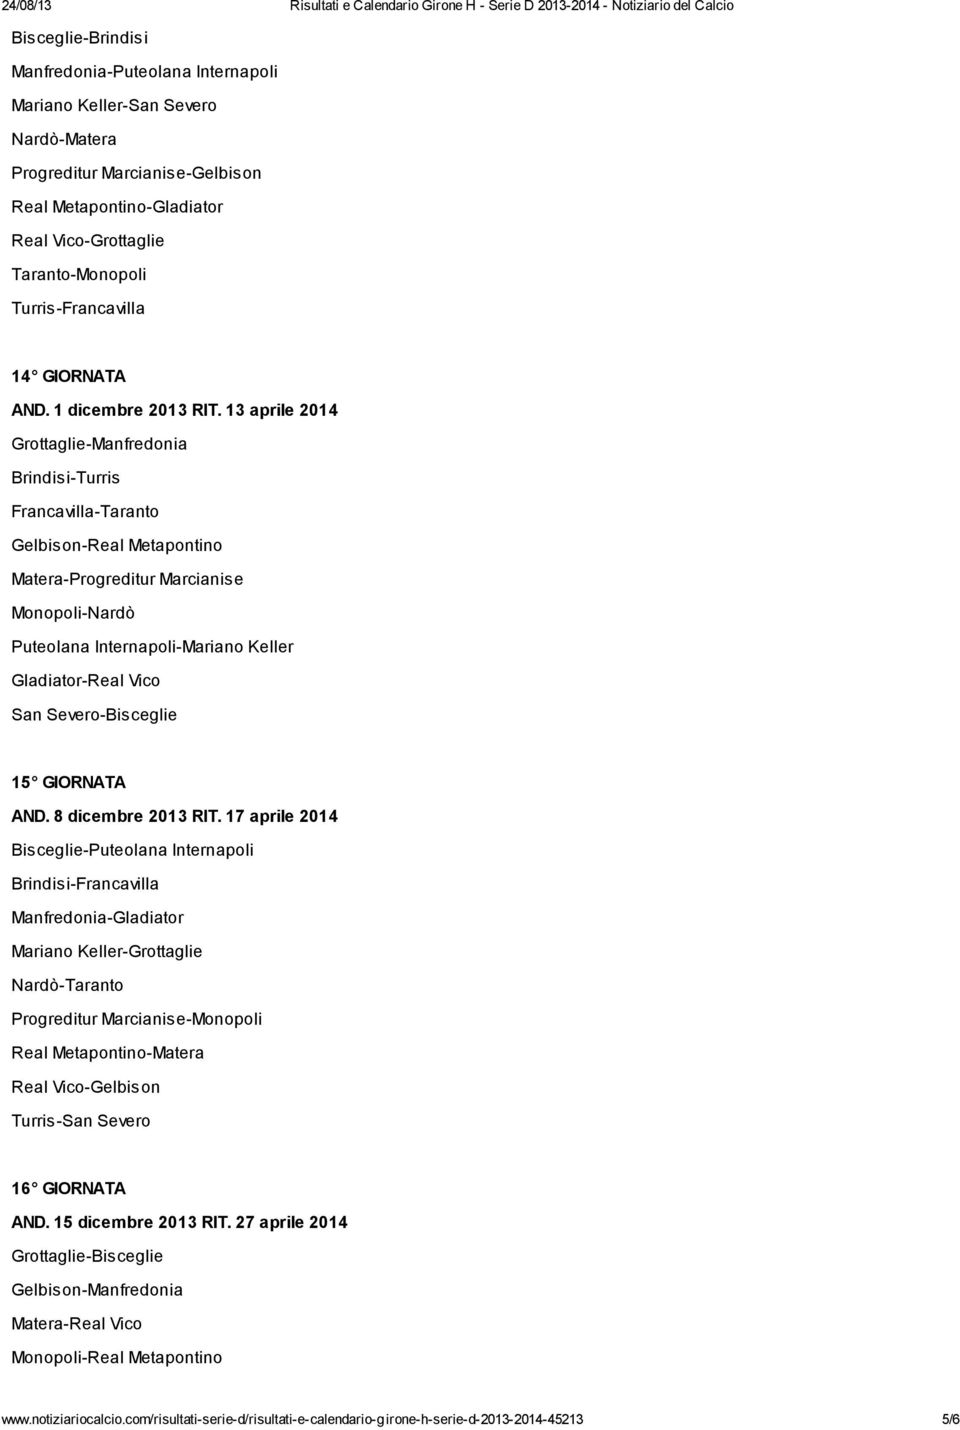 13 aprile 2014 Grottaglie-Manfredonia Brindisi-Turris Francavilla-Taranto Gelbison-Real Metapontino Matera-Progreditur Marcianise Monopoli-Nardò Puteolana Internapoli-Mariano Keller Gladiator-Real